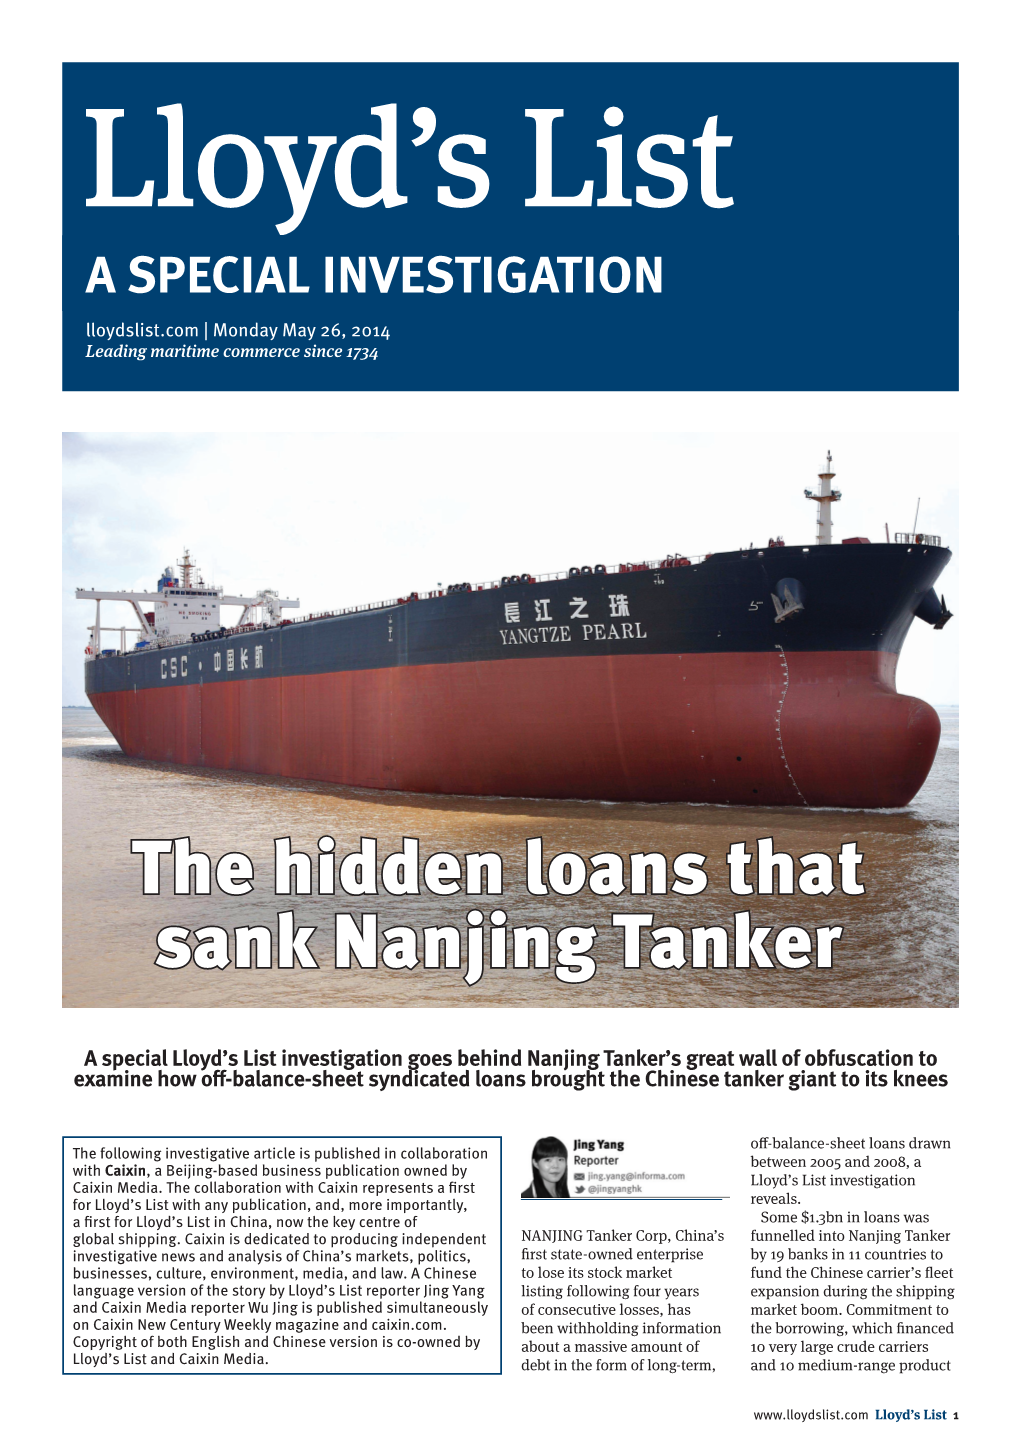 The Hidden Loans That Sank Nanjing Tanker